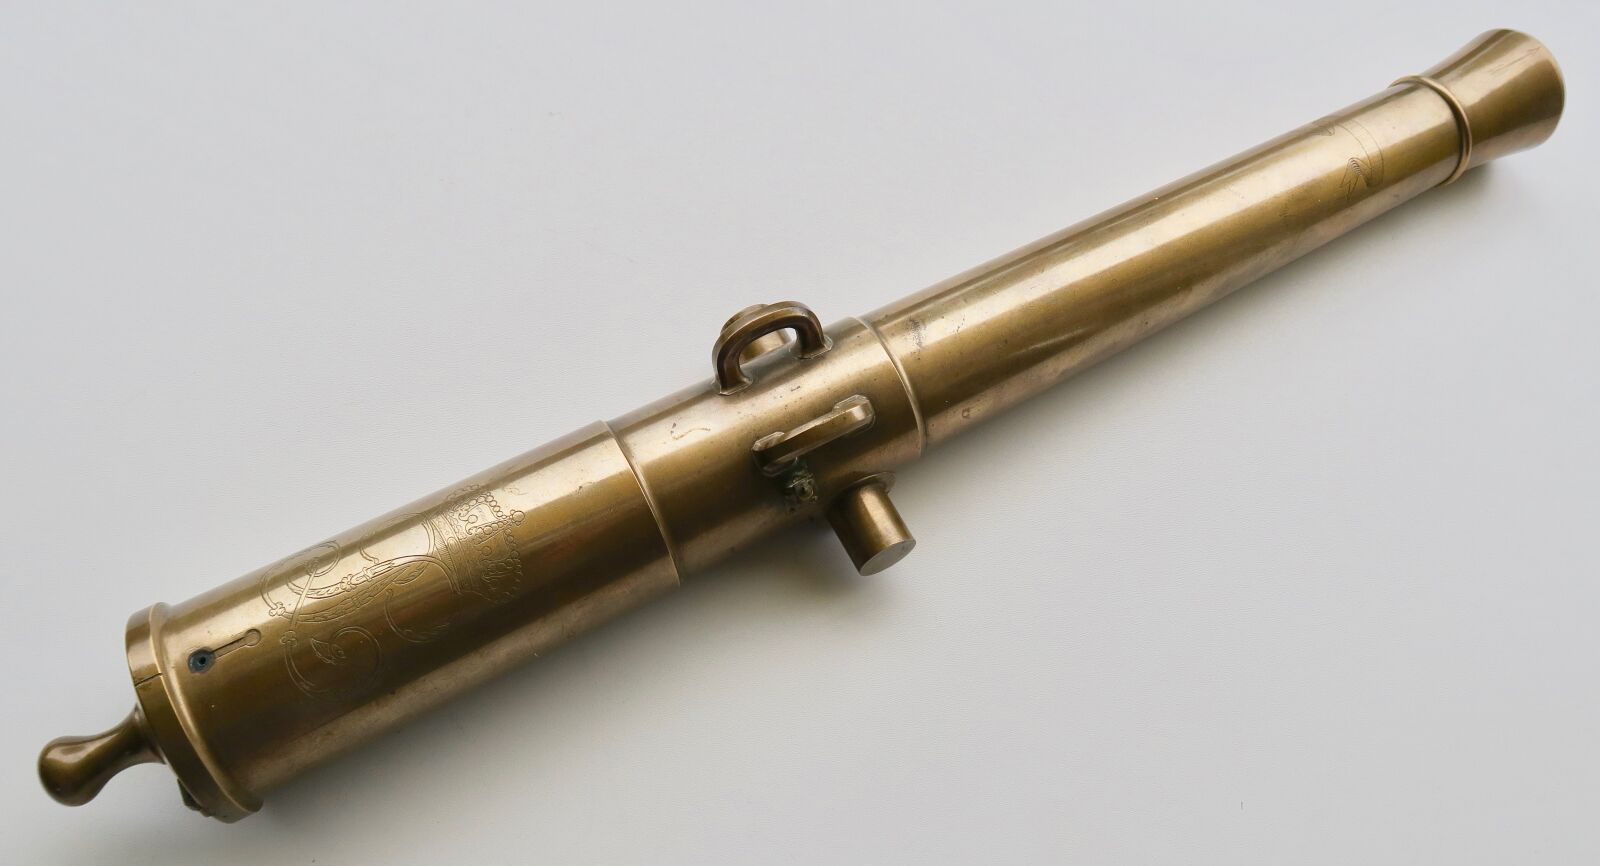 Null Artilleriemodell, Modell 1858 System de la Hitte, letztes Modell der Vorder&hellip;